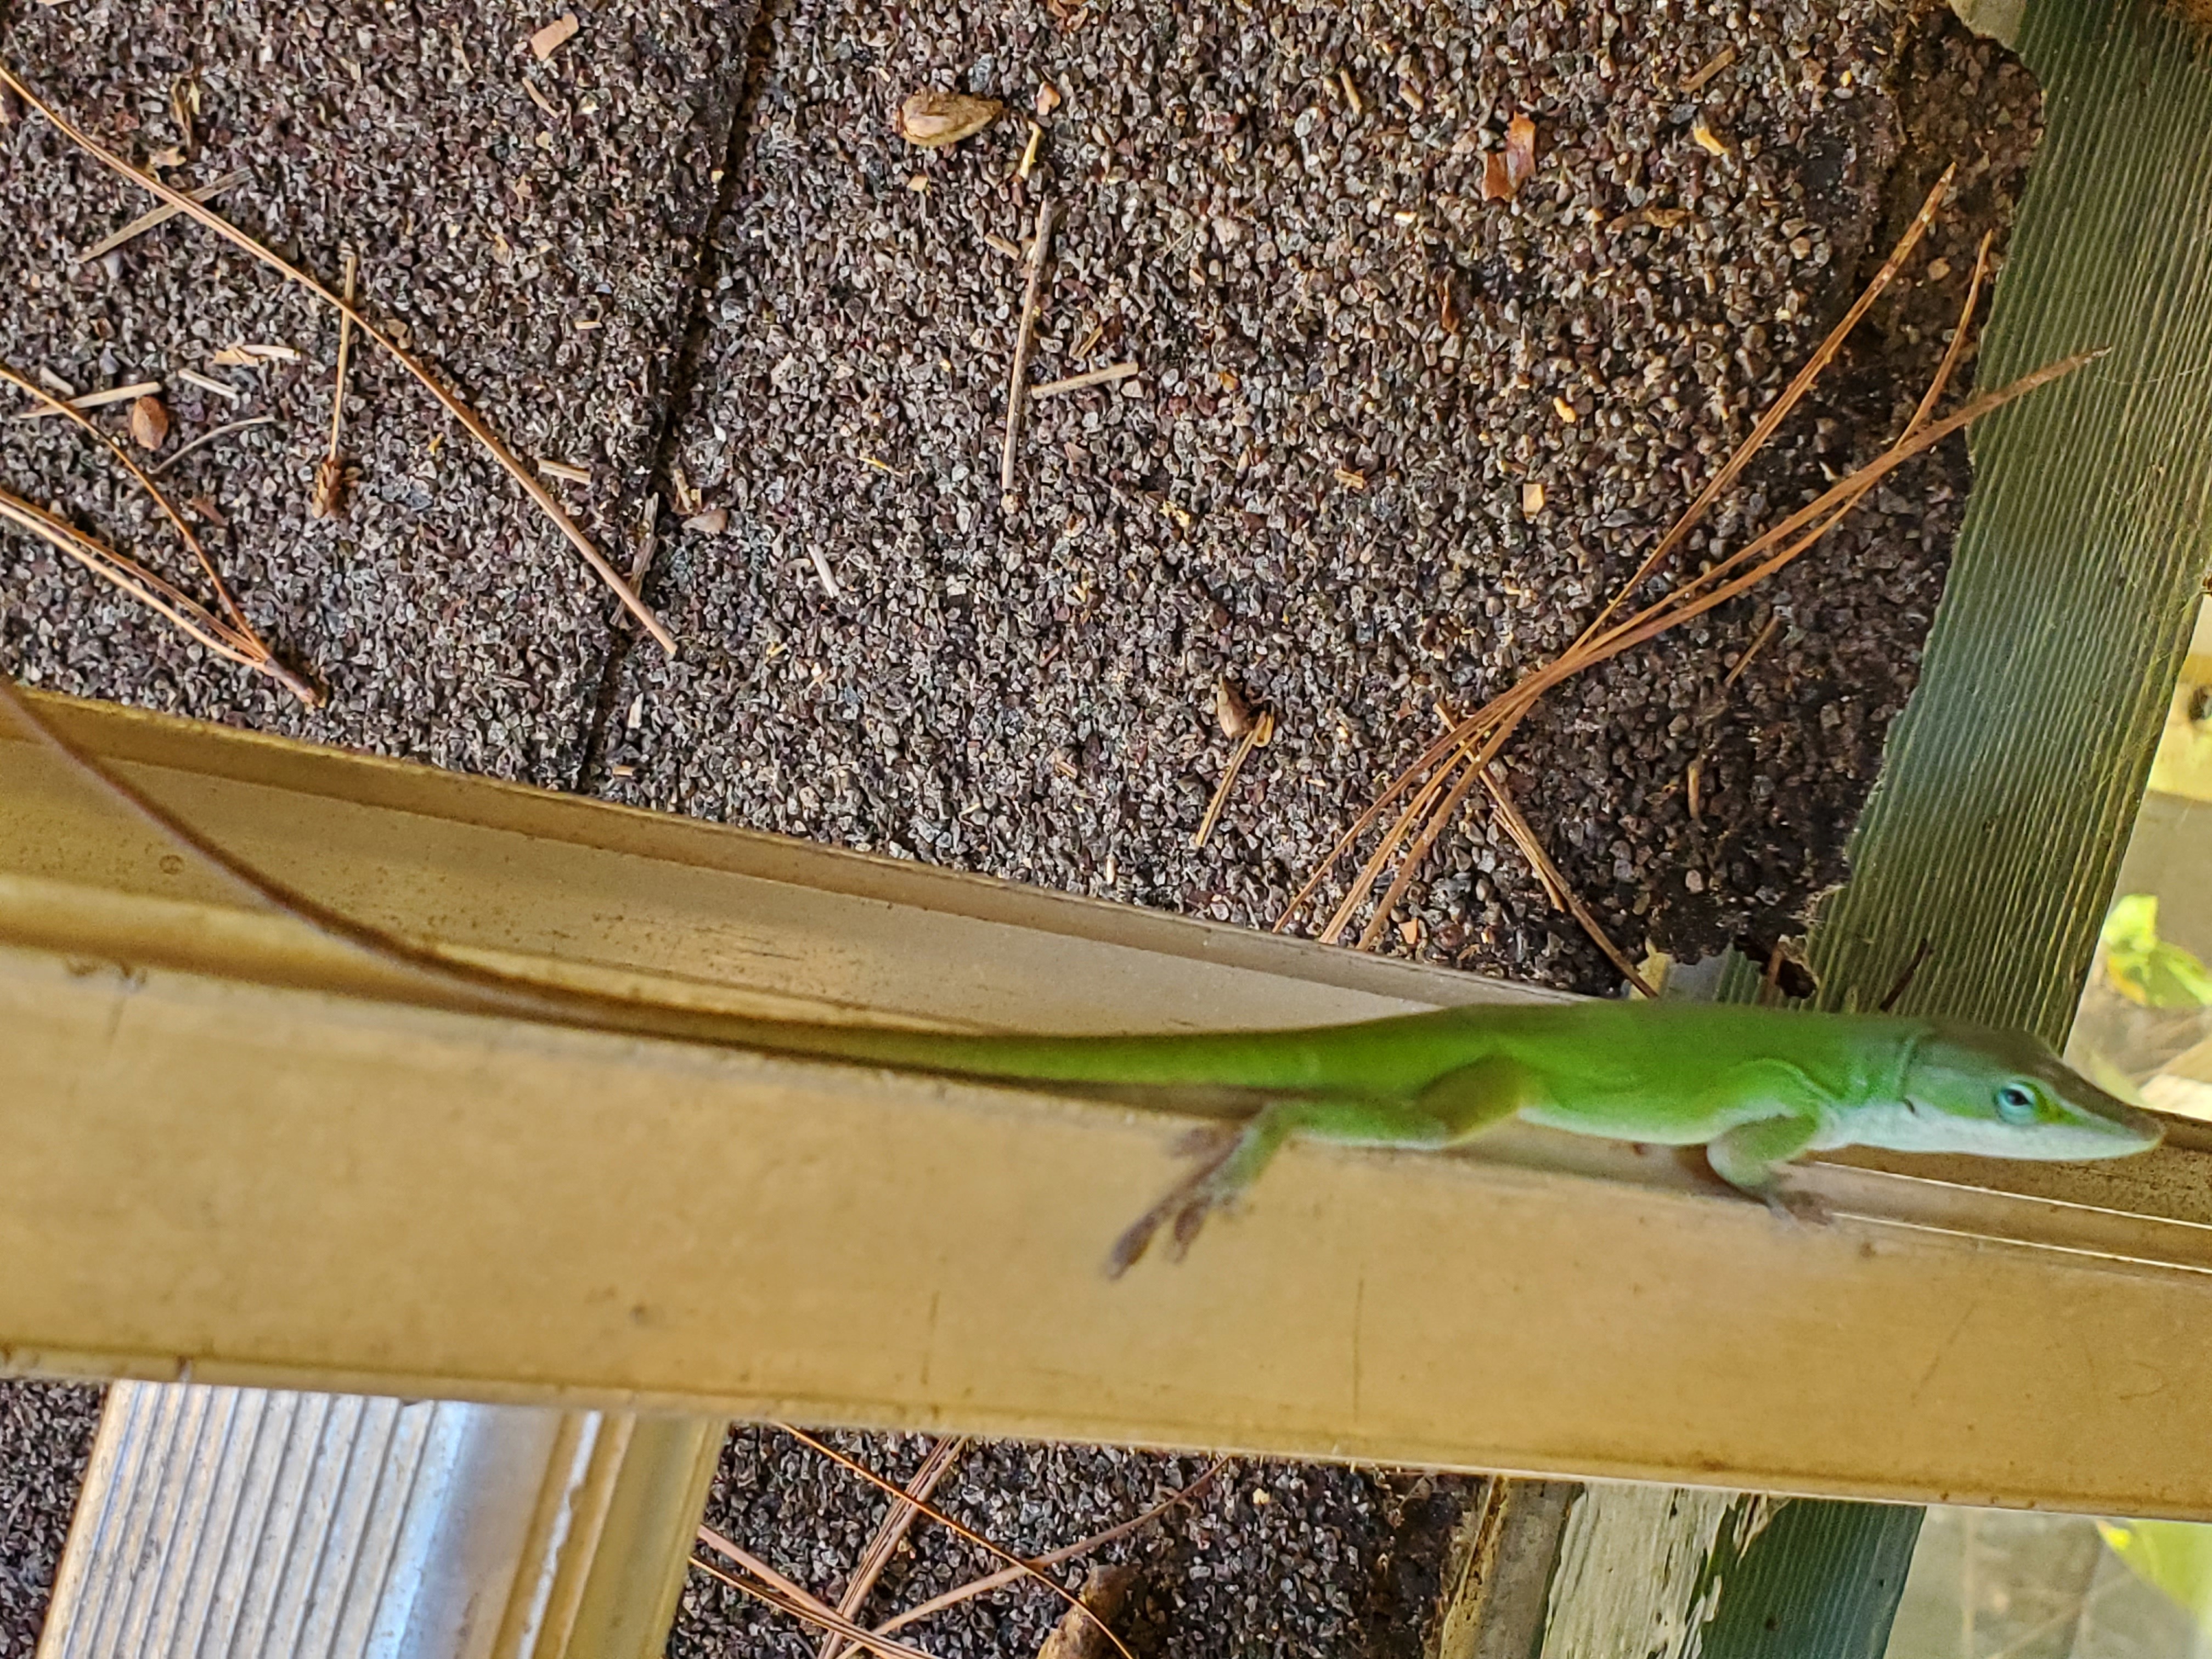 Green Anole Chameleon on a ladder